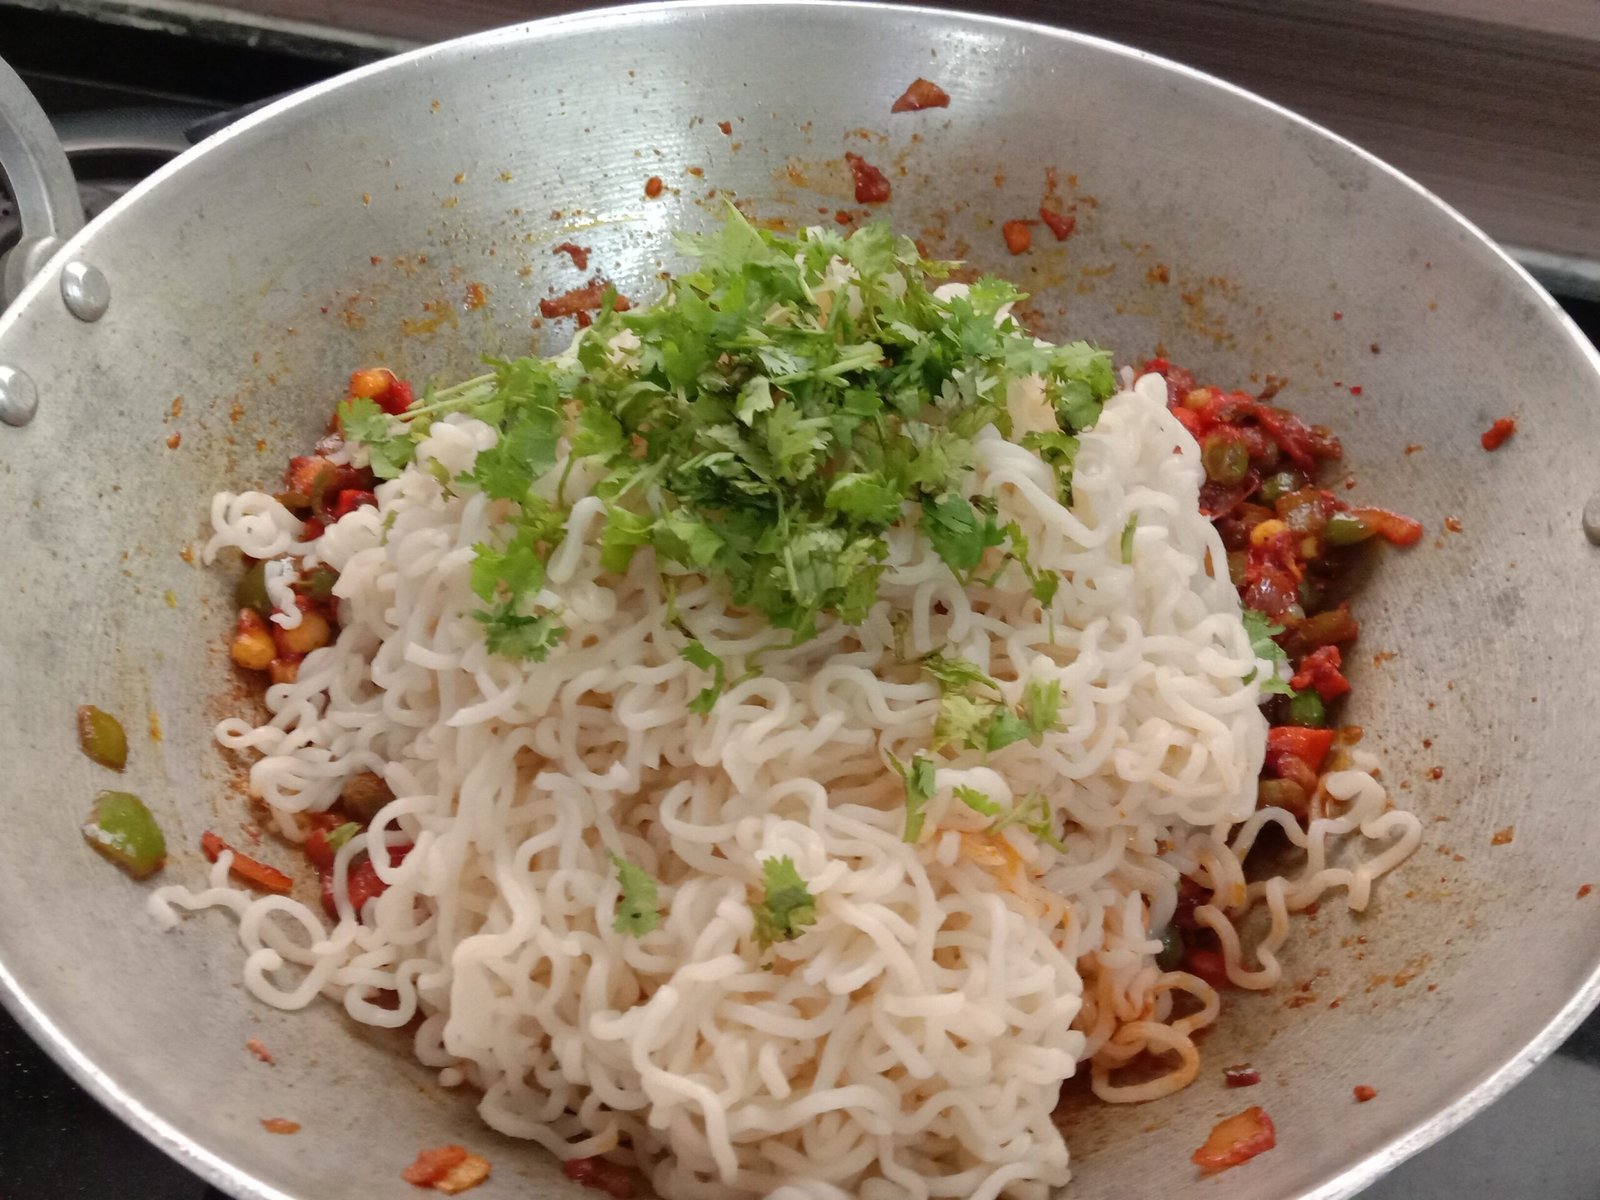 Adding coriander to ingredients, in pot, Egg bhurji maggi noodles recipe.